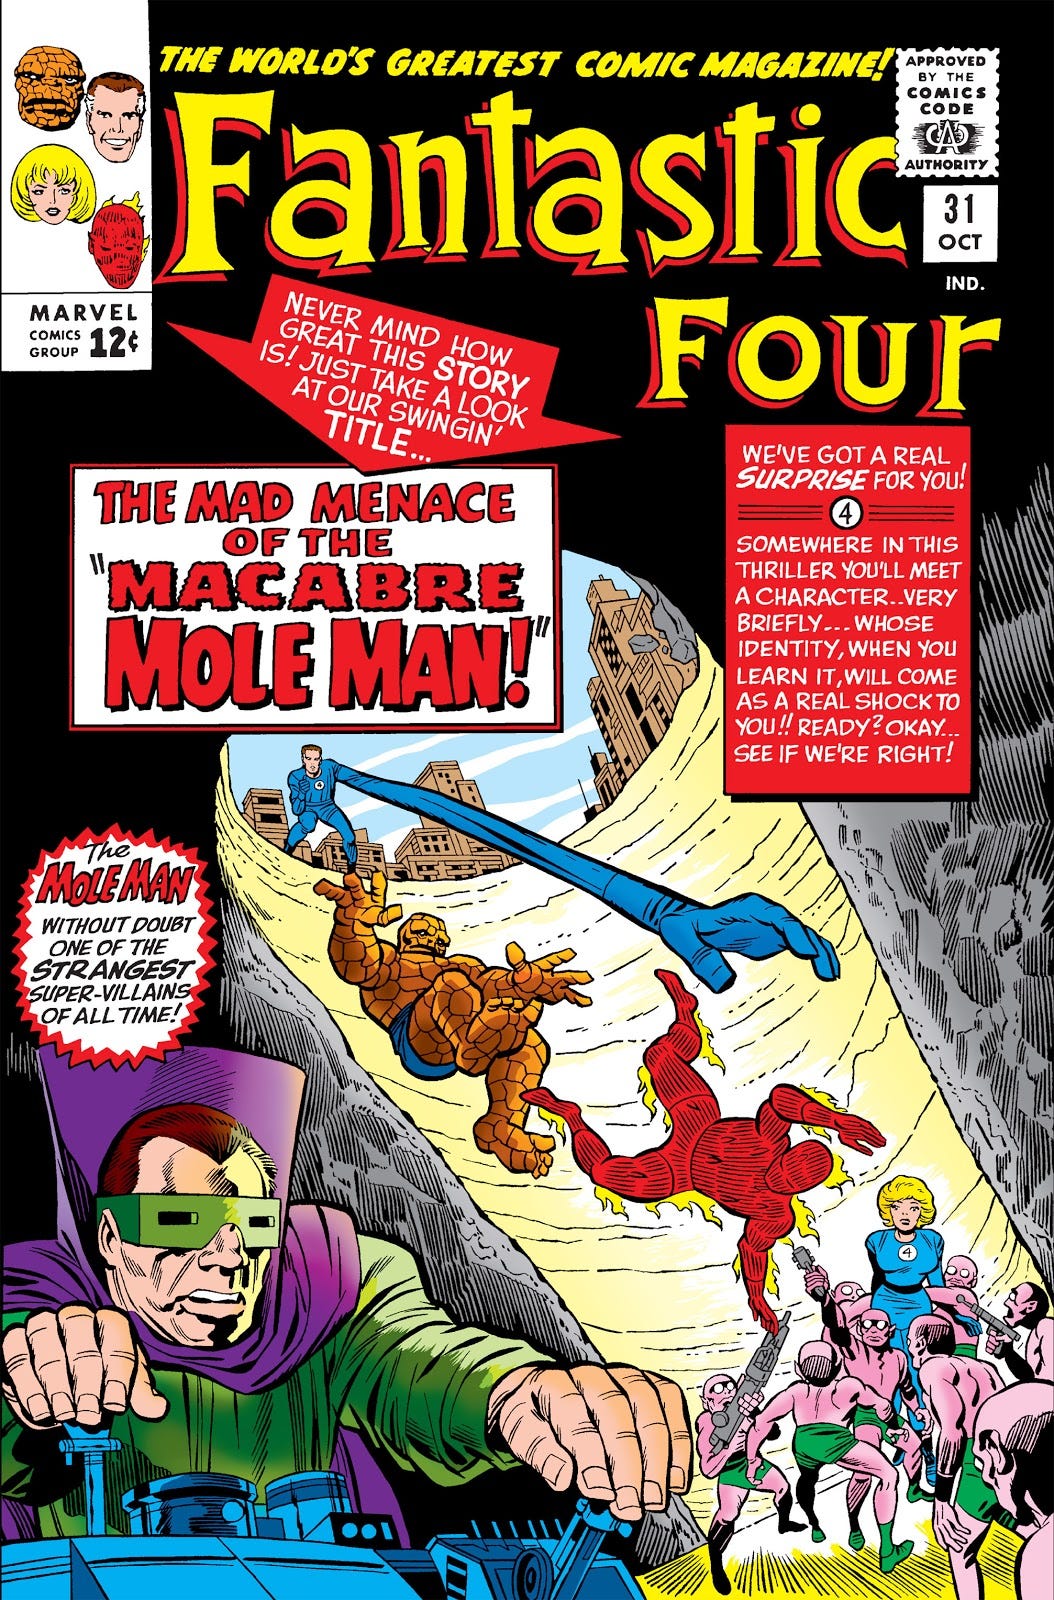 Fantastic Four Vol 1 31 | Marvel Database | Fandom